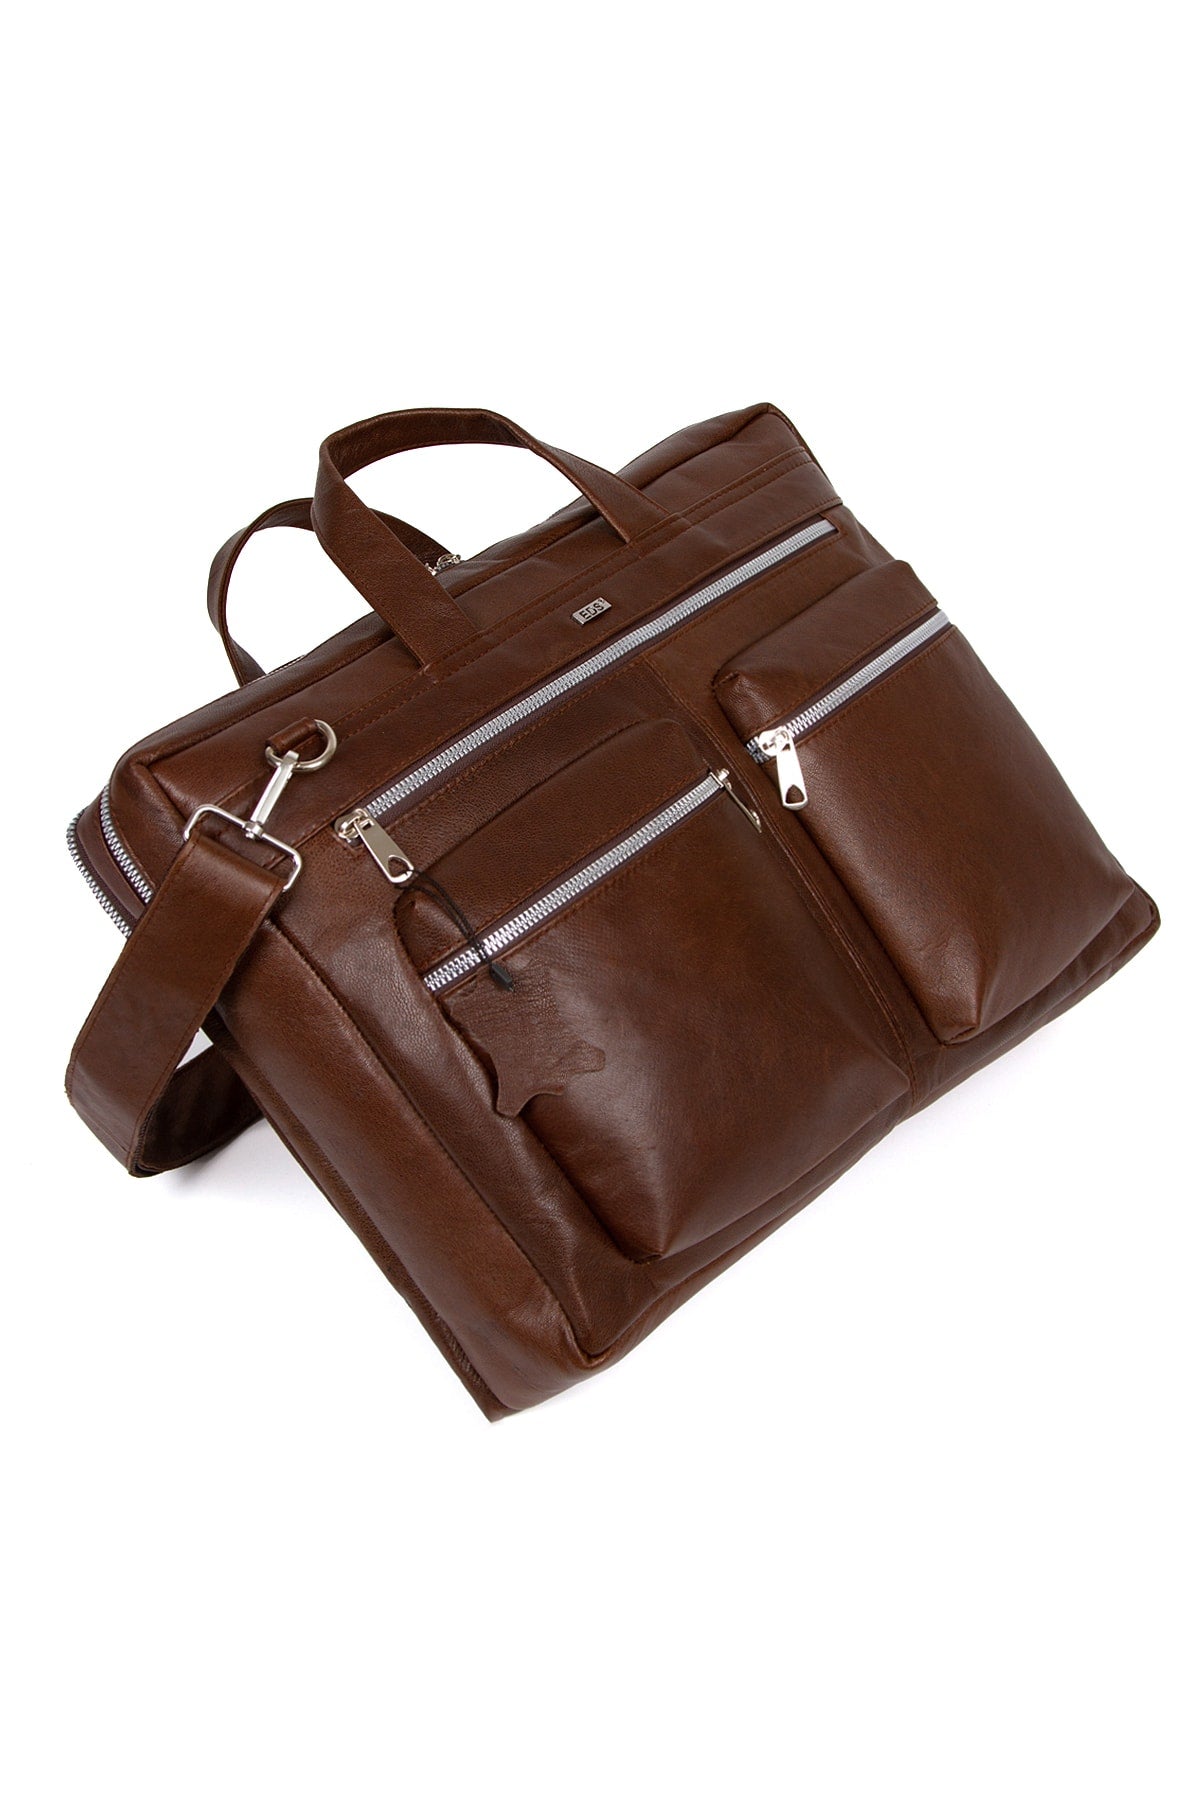 1st Class Genuine Leather Large Size Briefcase Laptop Bag Brown (W:38CM LENGTH:26CM)